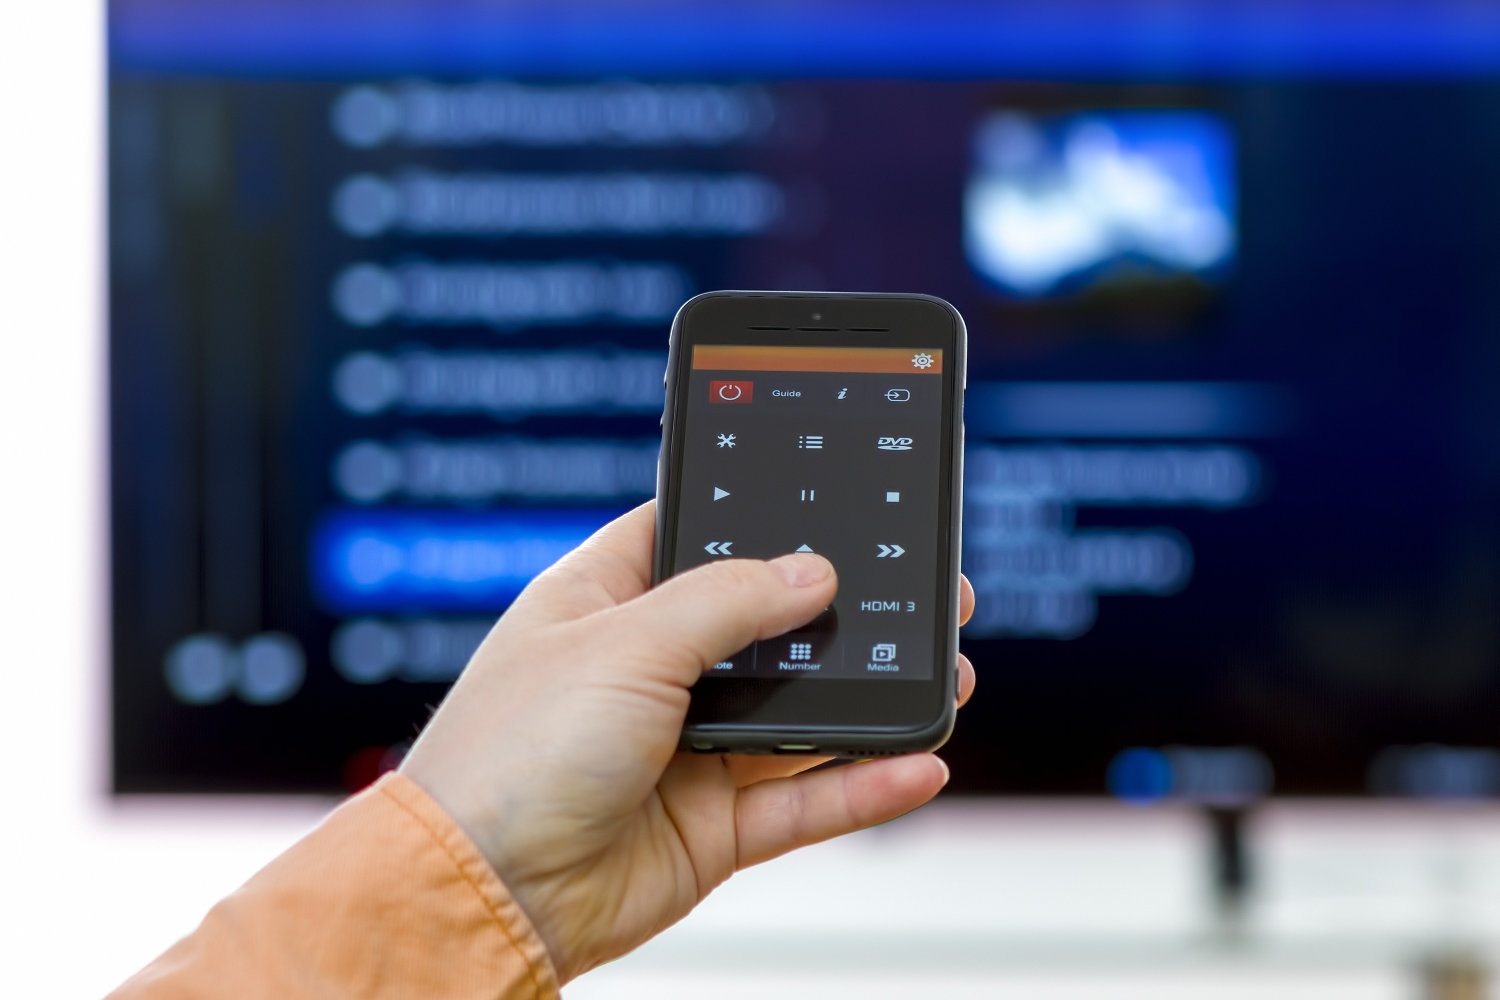 Toshiba TV Remote Control – Apps no Google Play